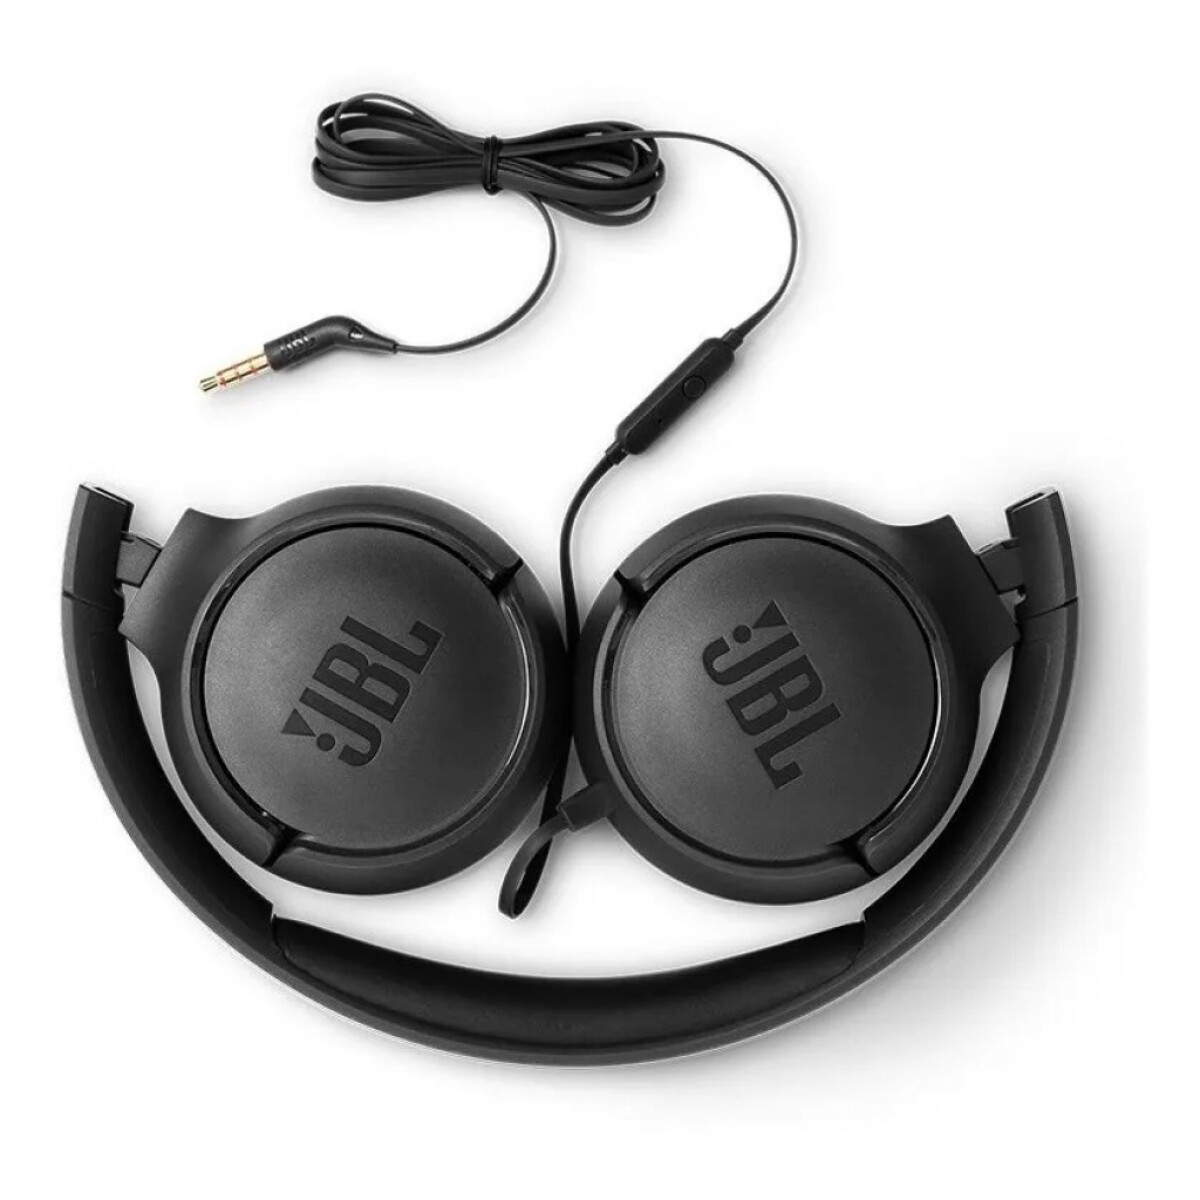 Jbl t500 auricular on-ear con cable Negro